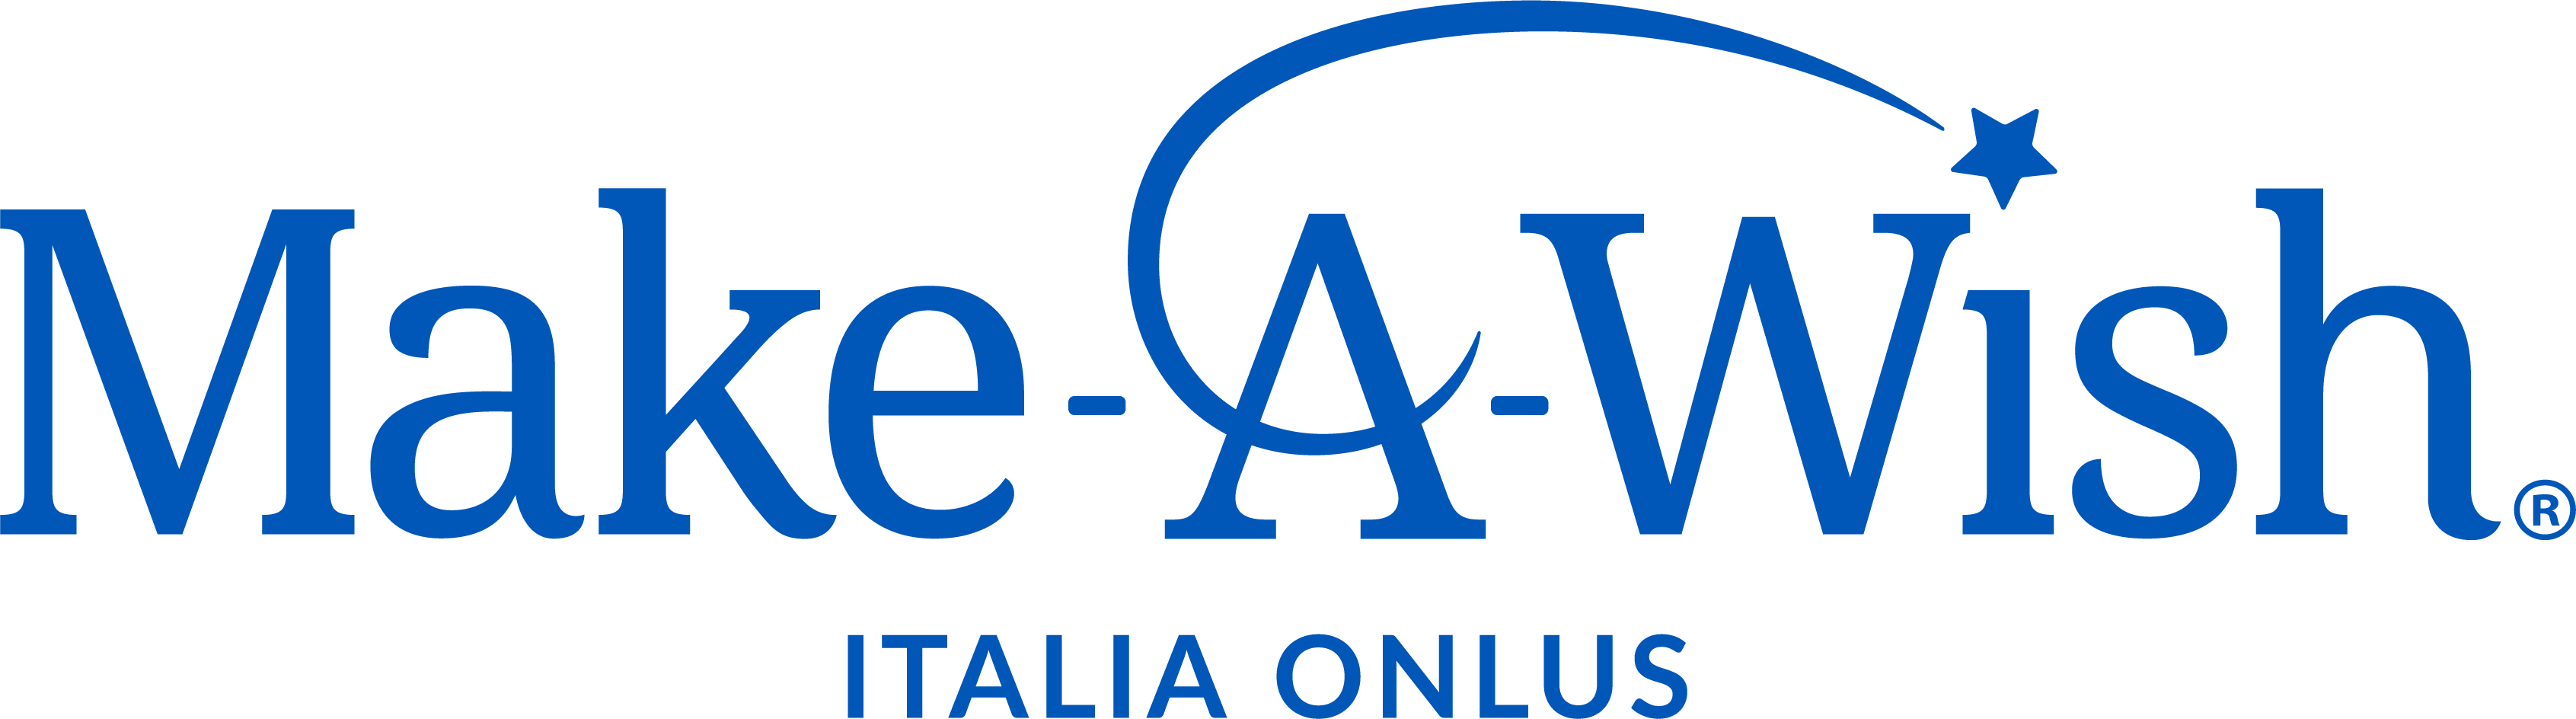 Make-A-Wish Italia Onlus logo